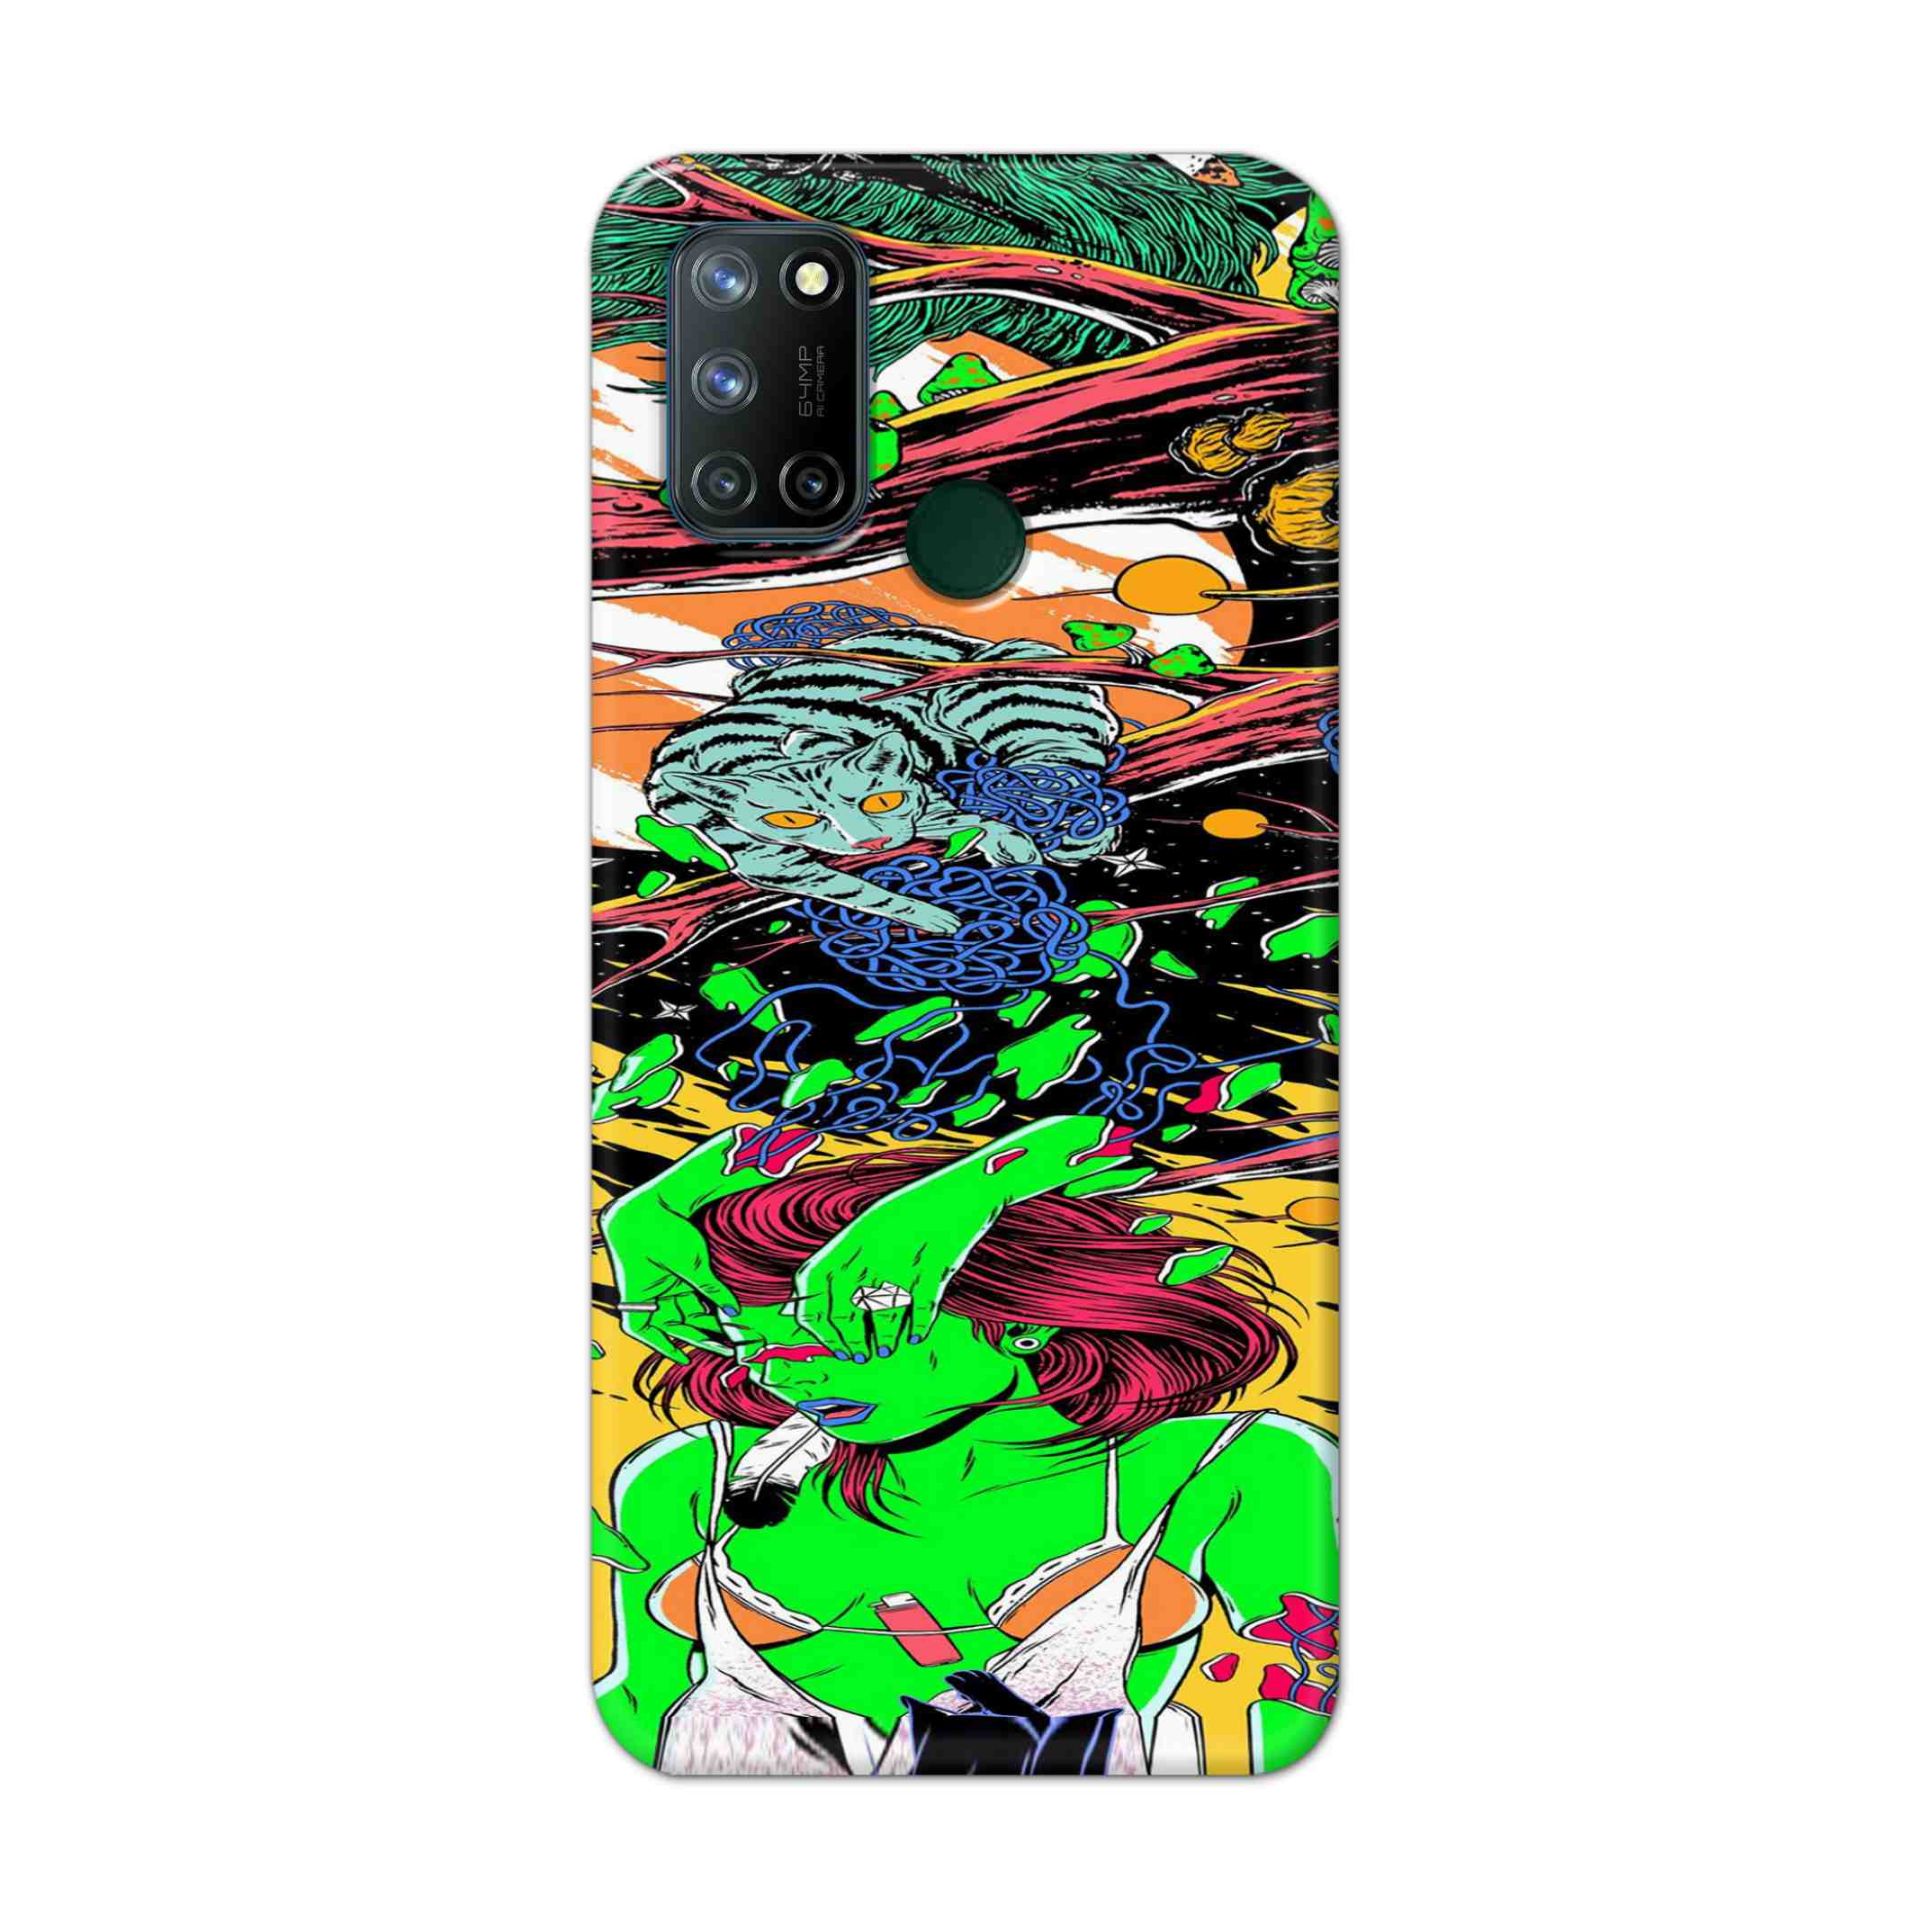 Buy Green Girl Art Hard Back Mobile Phone Case Cover For Realme 7i Online